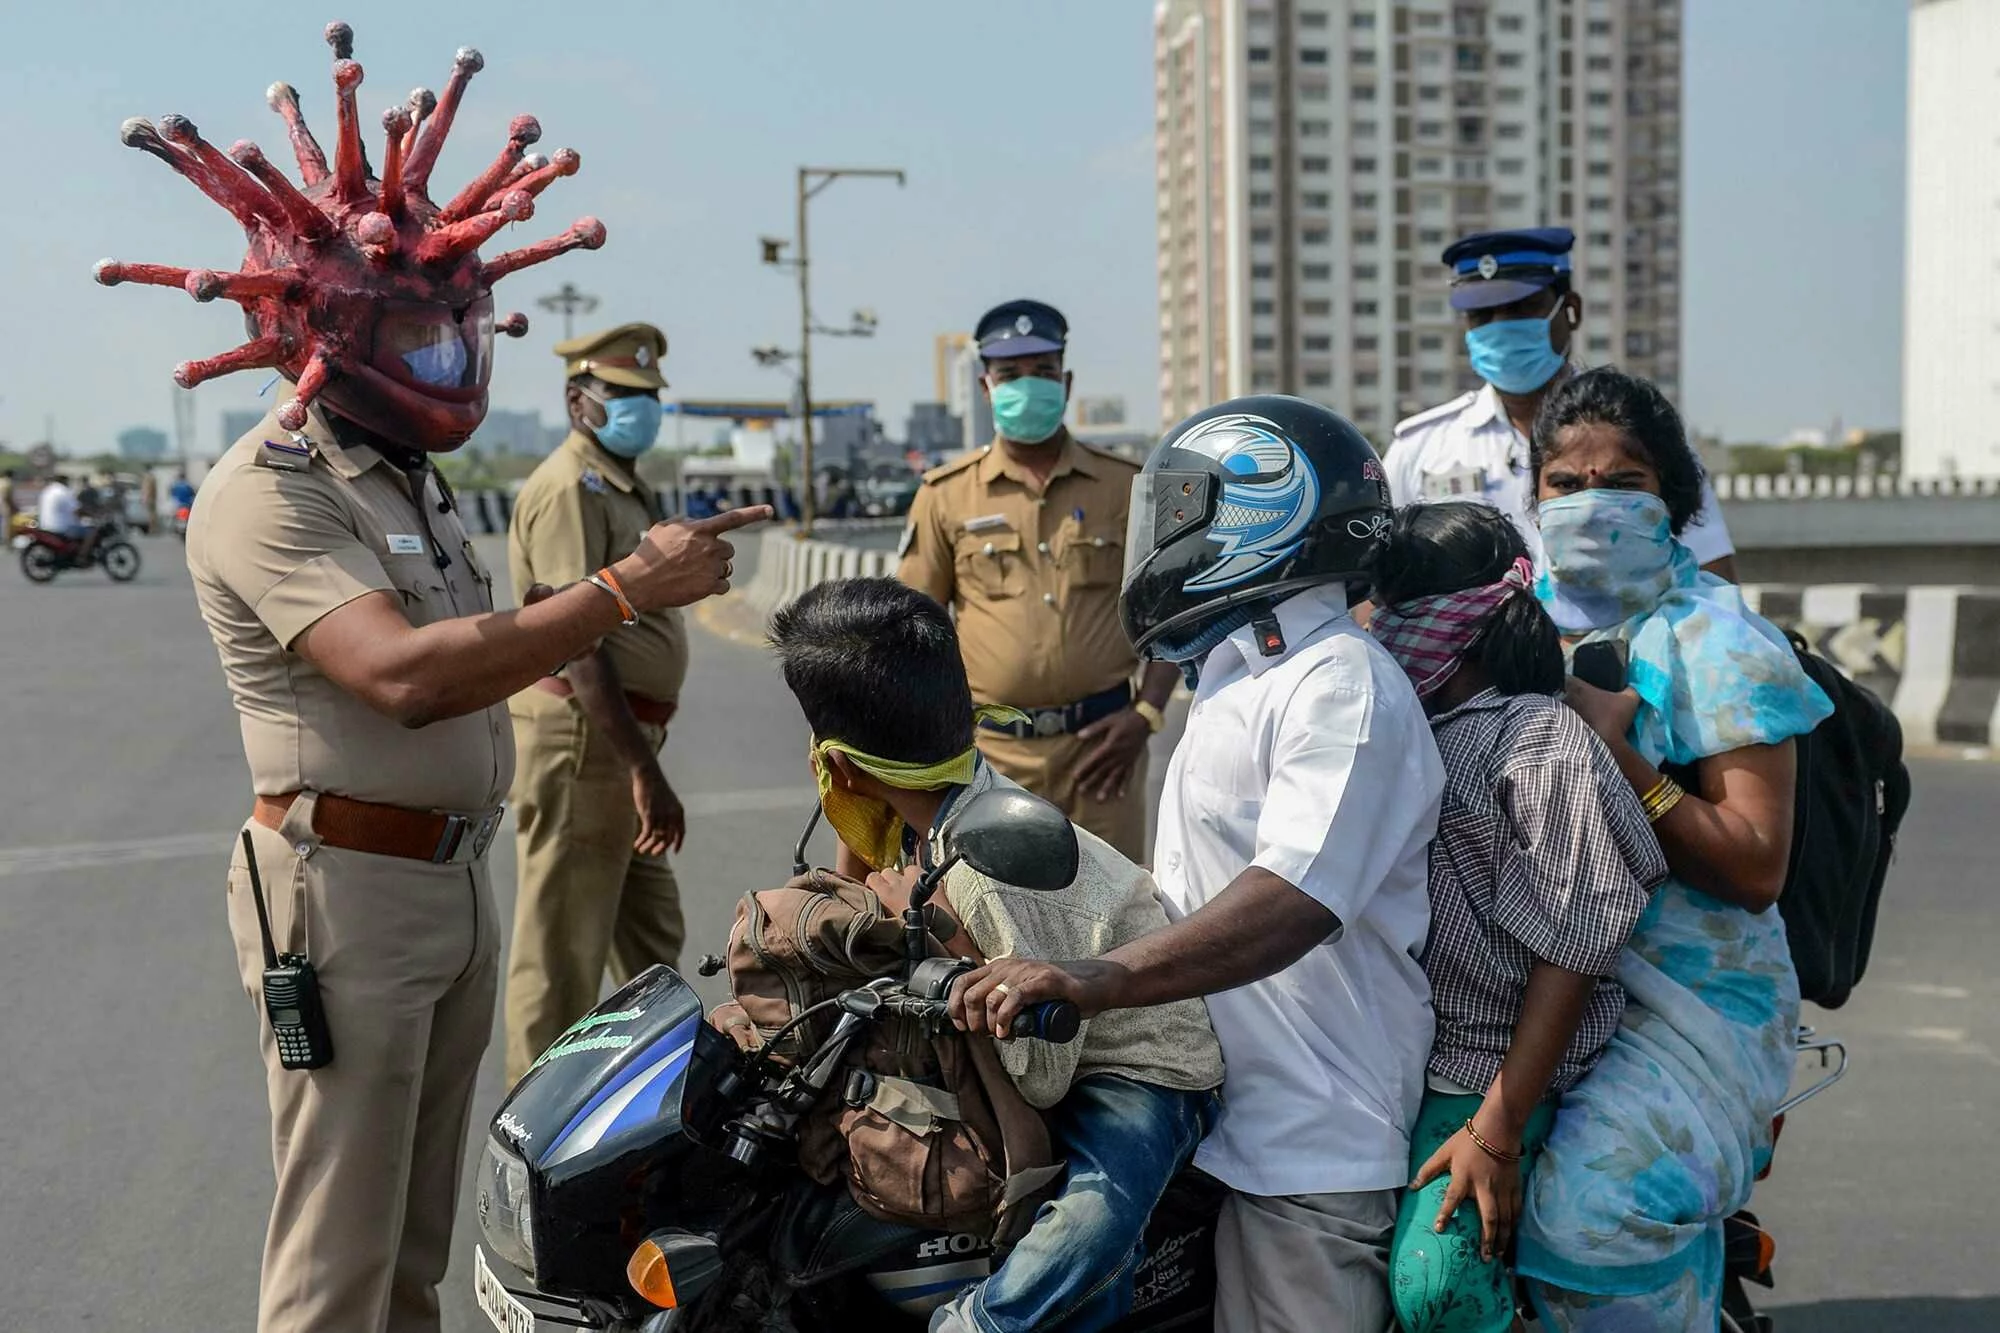 Cops wear coronavirus helmets to scare residents into lockdown in India